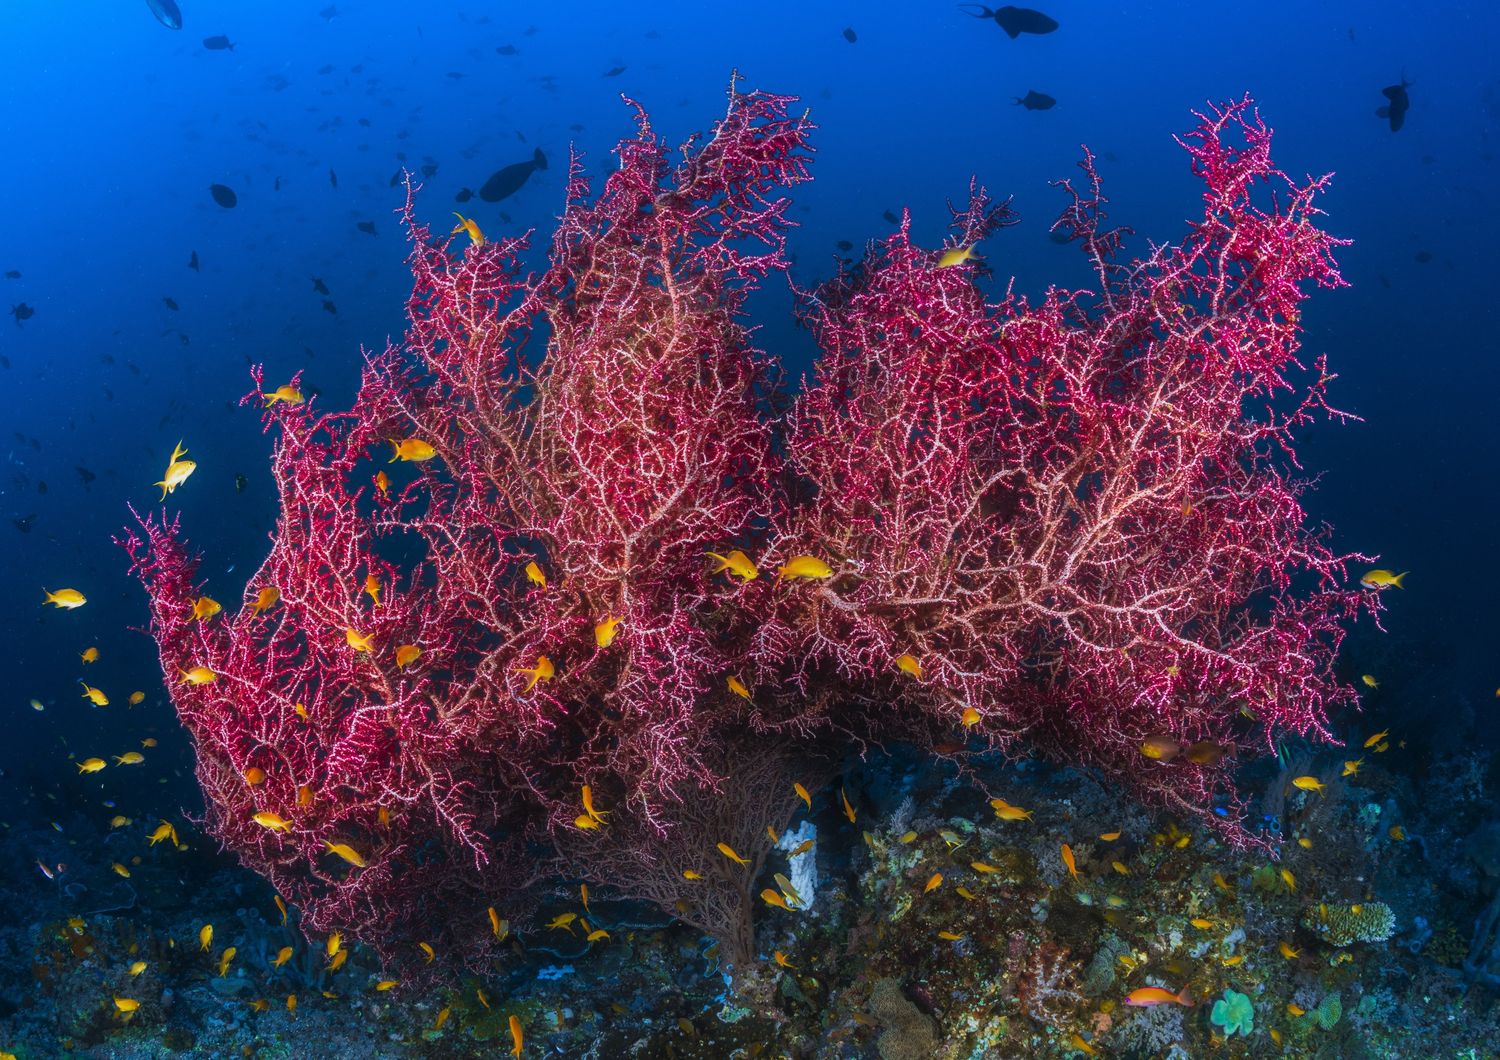 I coralli accumulano inquinanti in ambiente marino